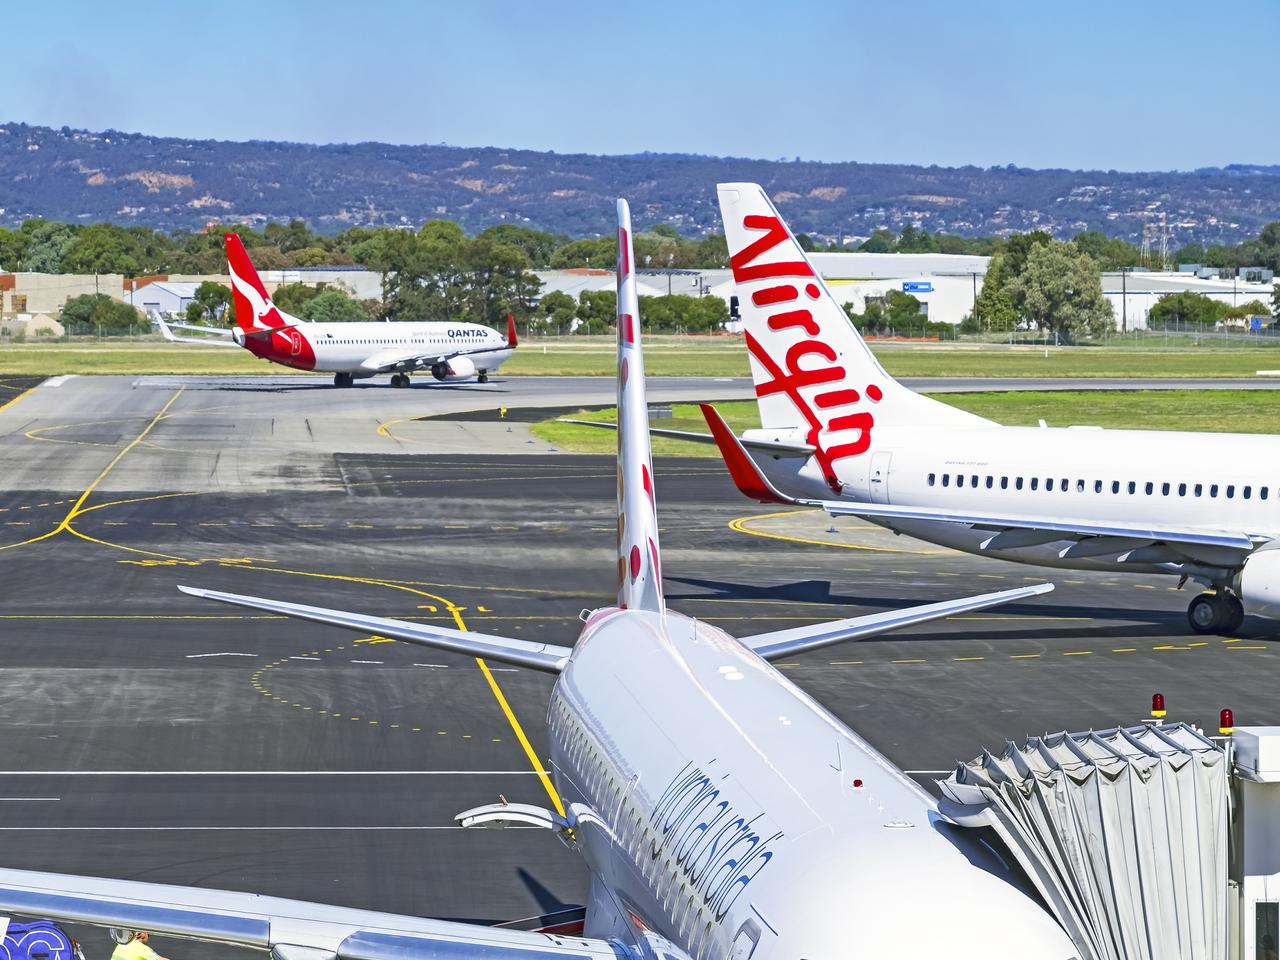 Planes from rivals Qantas and Virgin at Adelaide airport